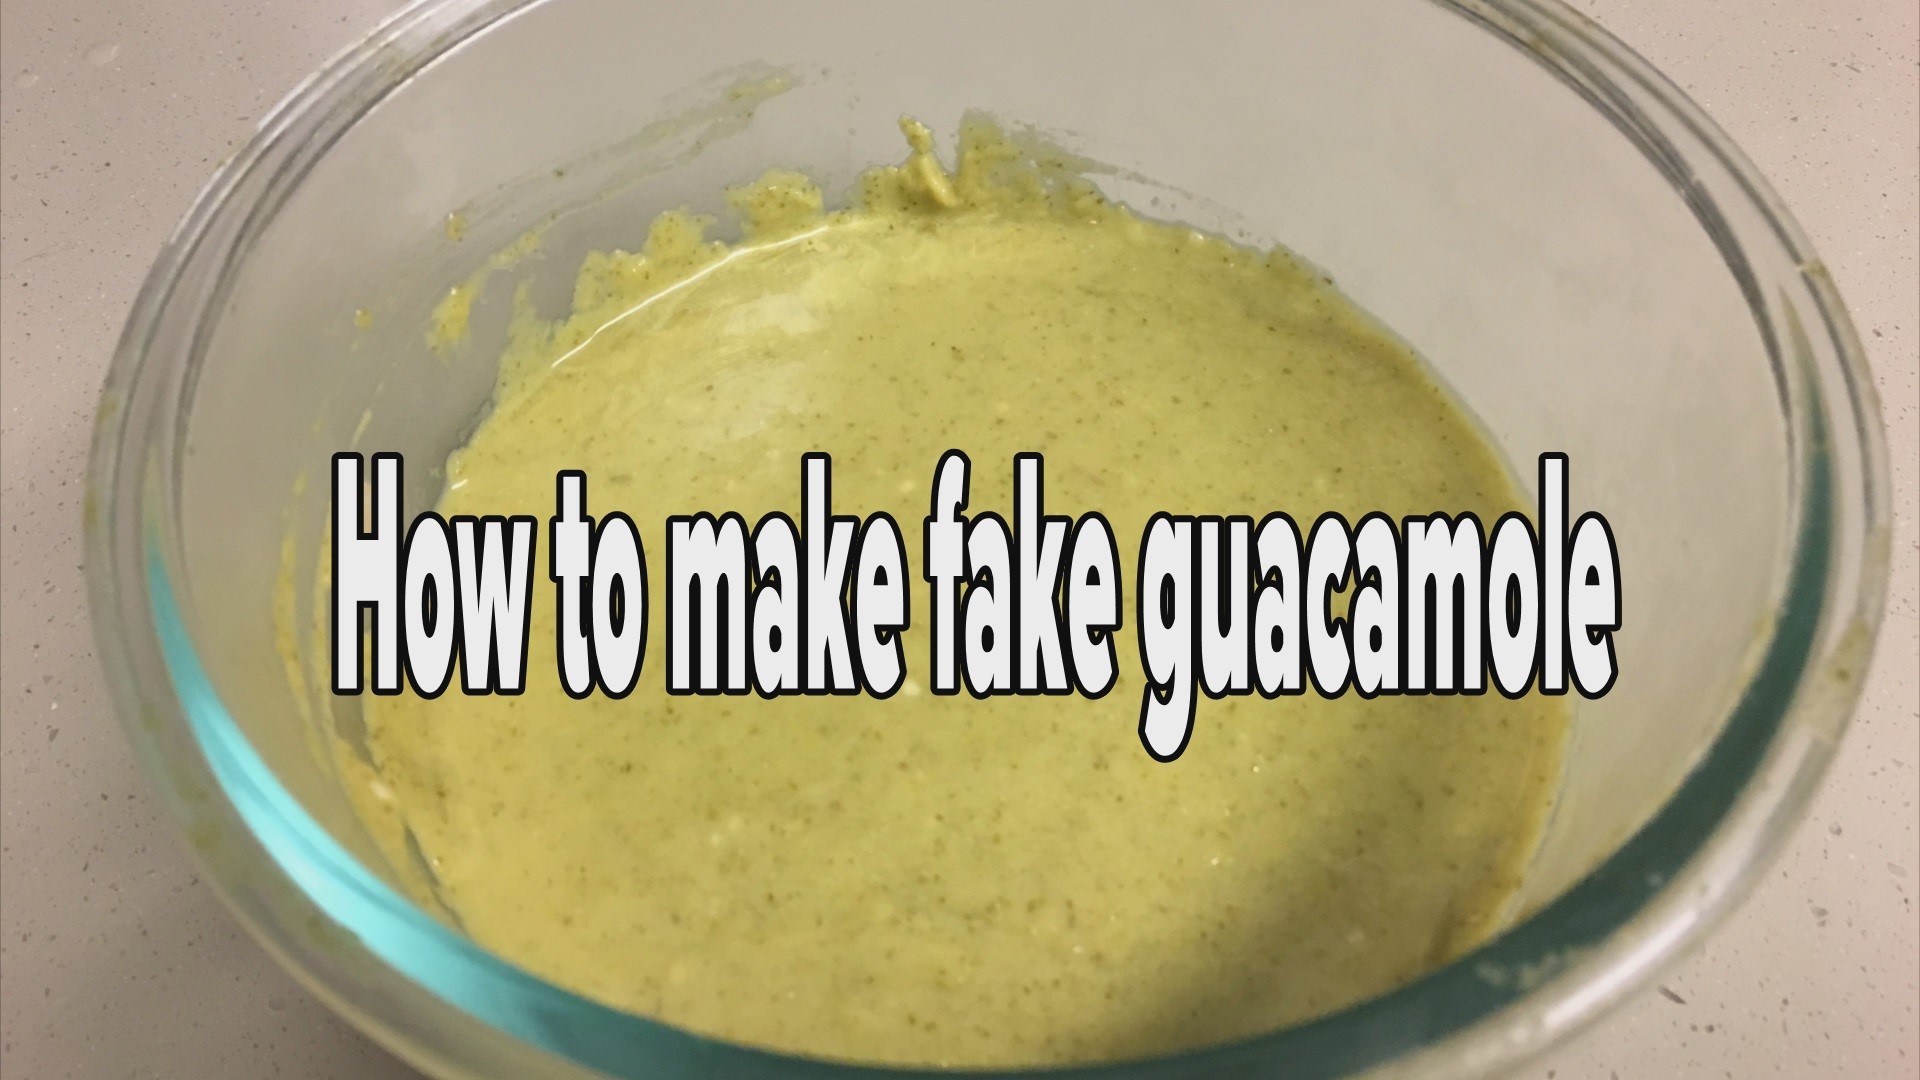 How to make fake guacamole.